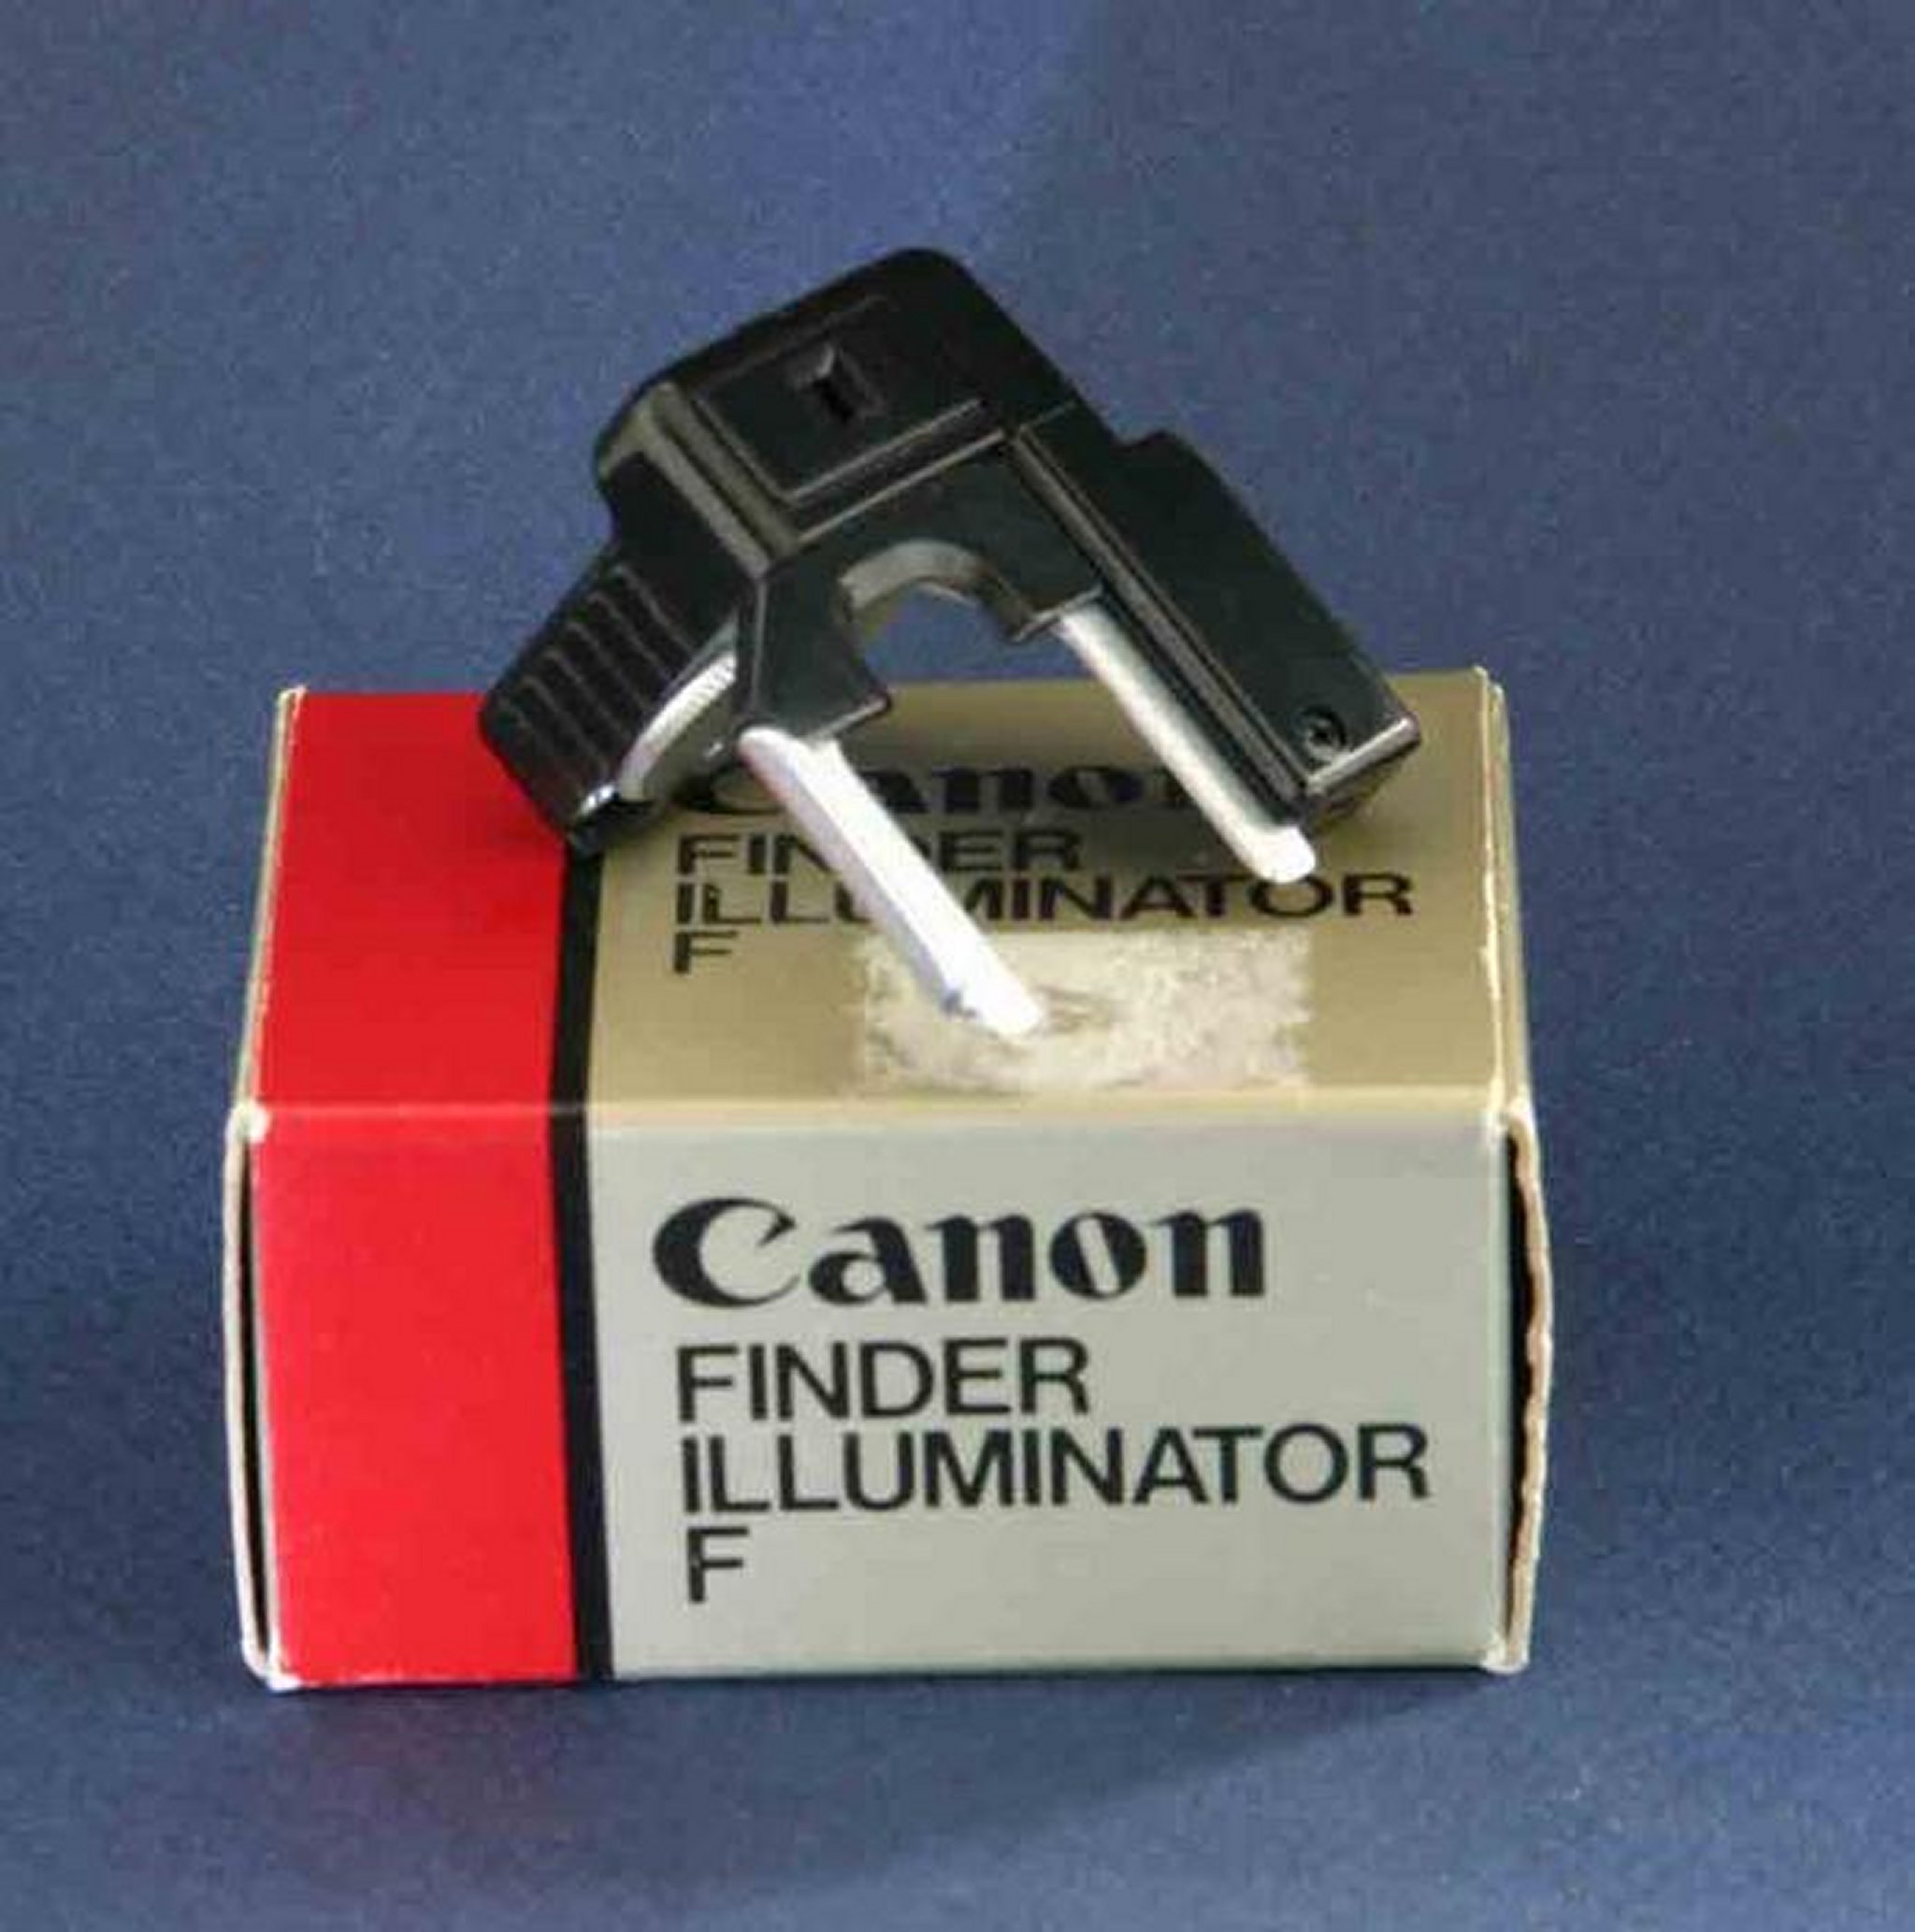 Finder illuminator F – Fou du Canon F-1